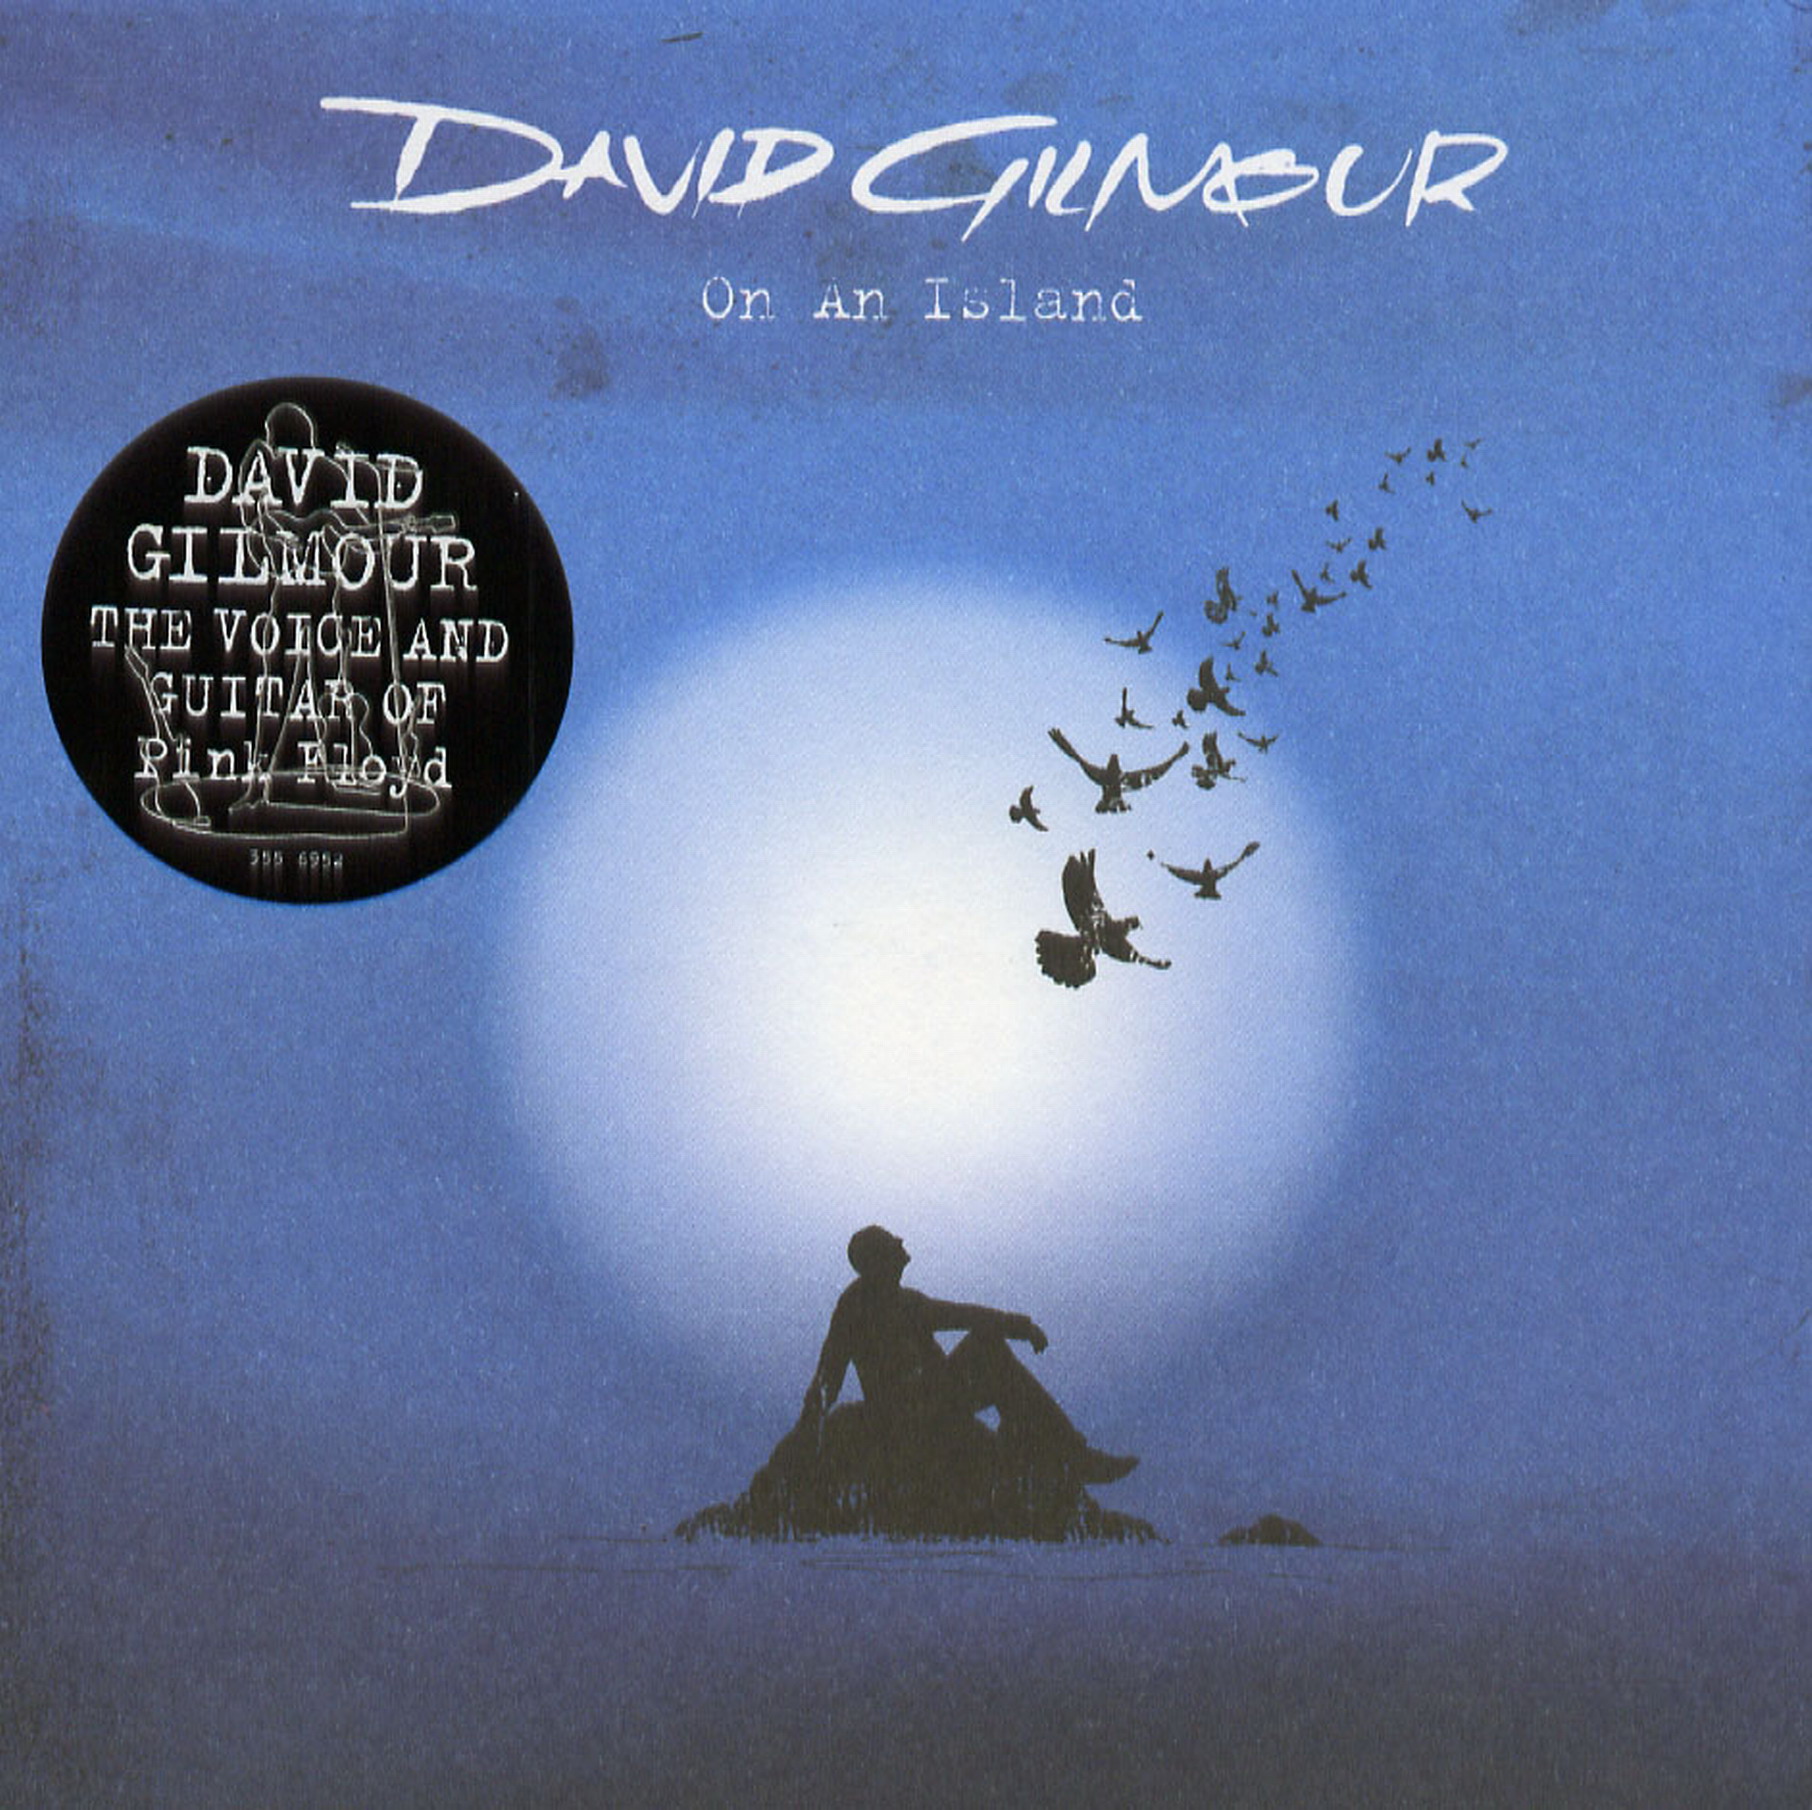 David island. Дэвид Гилмор 2006. David Gilmour on an Island 2006. David Gilmour 2006 on an Island обложка. On an Island Дэвид Гилмор.